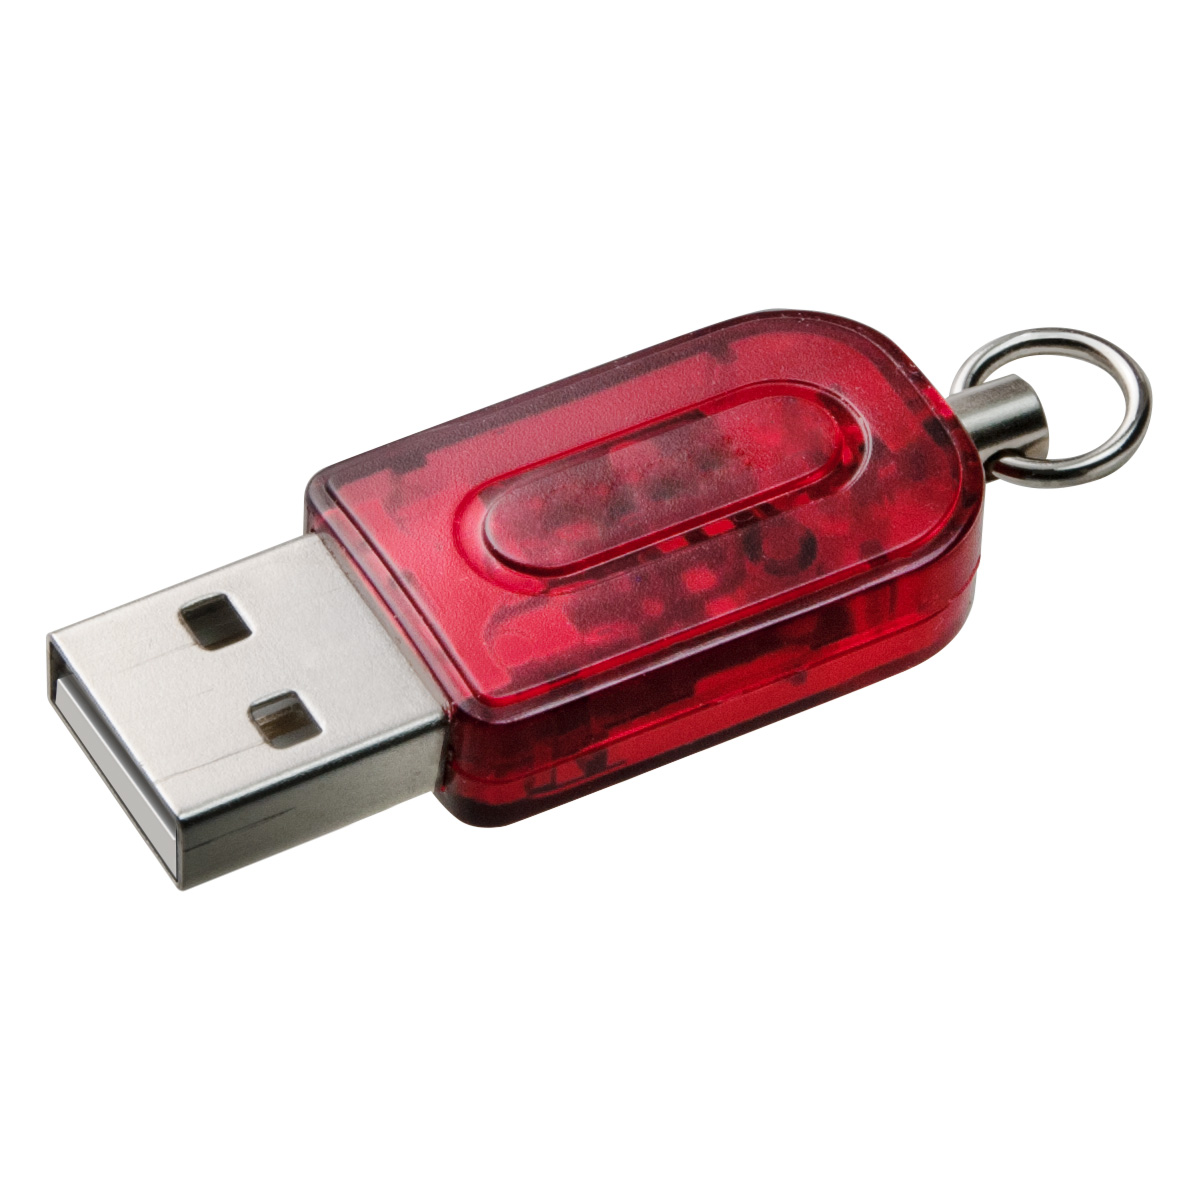 USB-dongle met MagicArt software